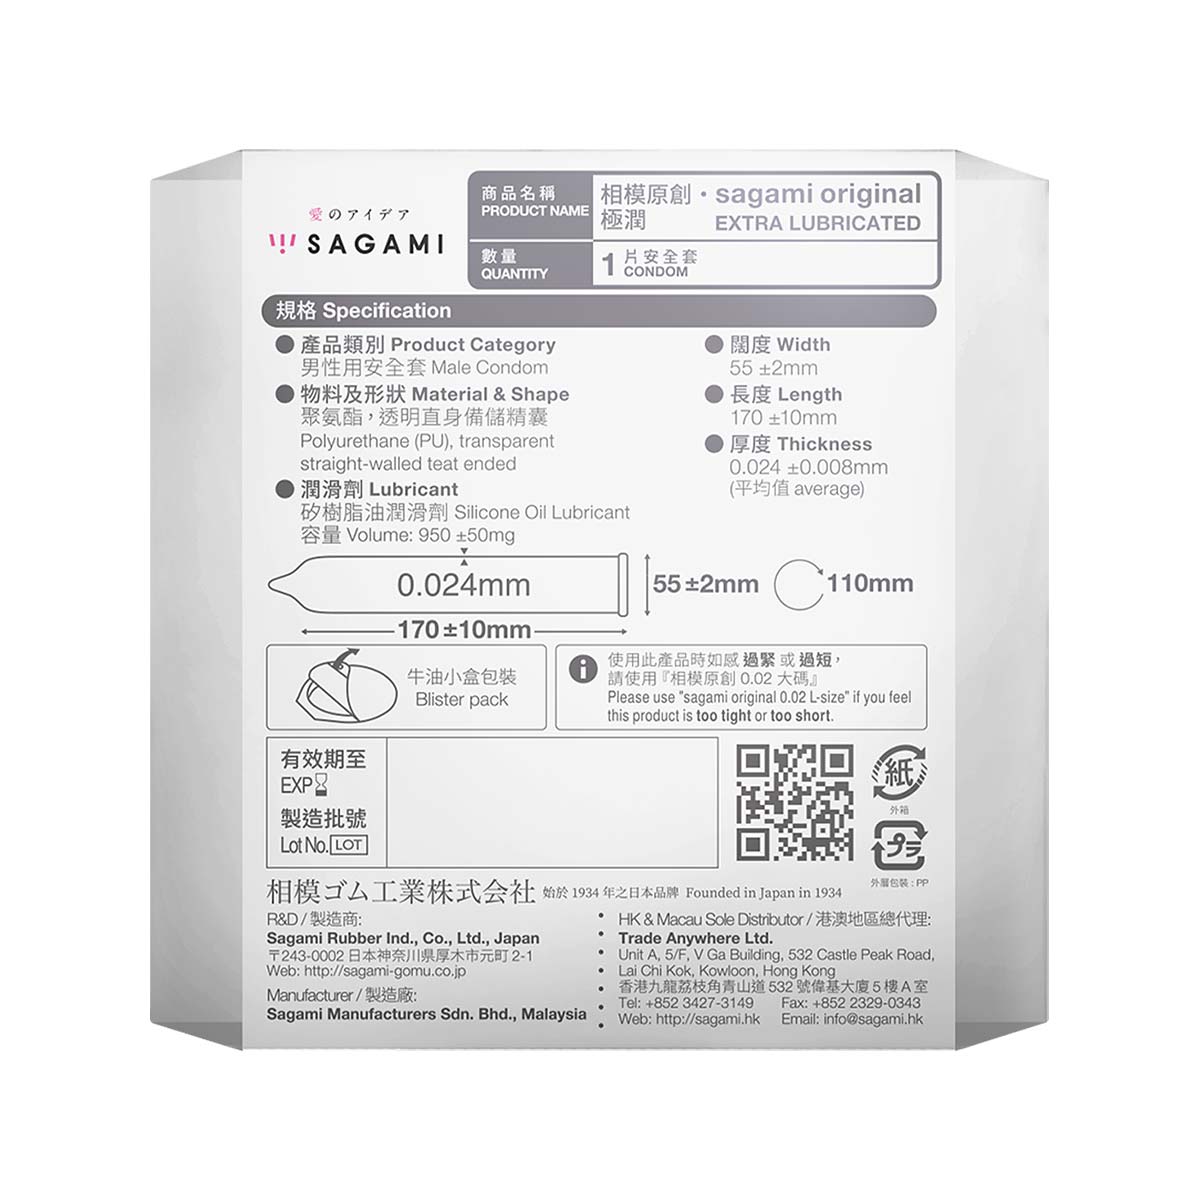 Sagami Original 0.02 Extra Lubricated (2nd generation) 1's Pack PU Condom-p_3